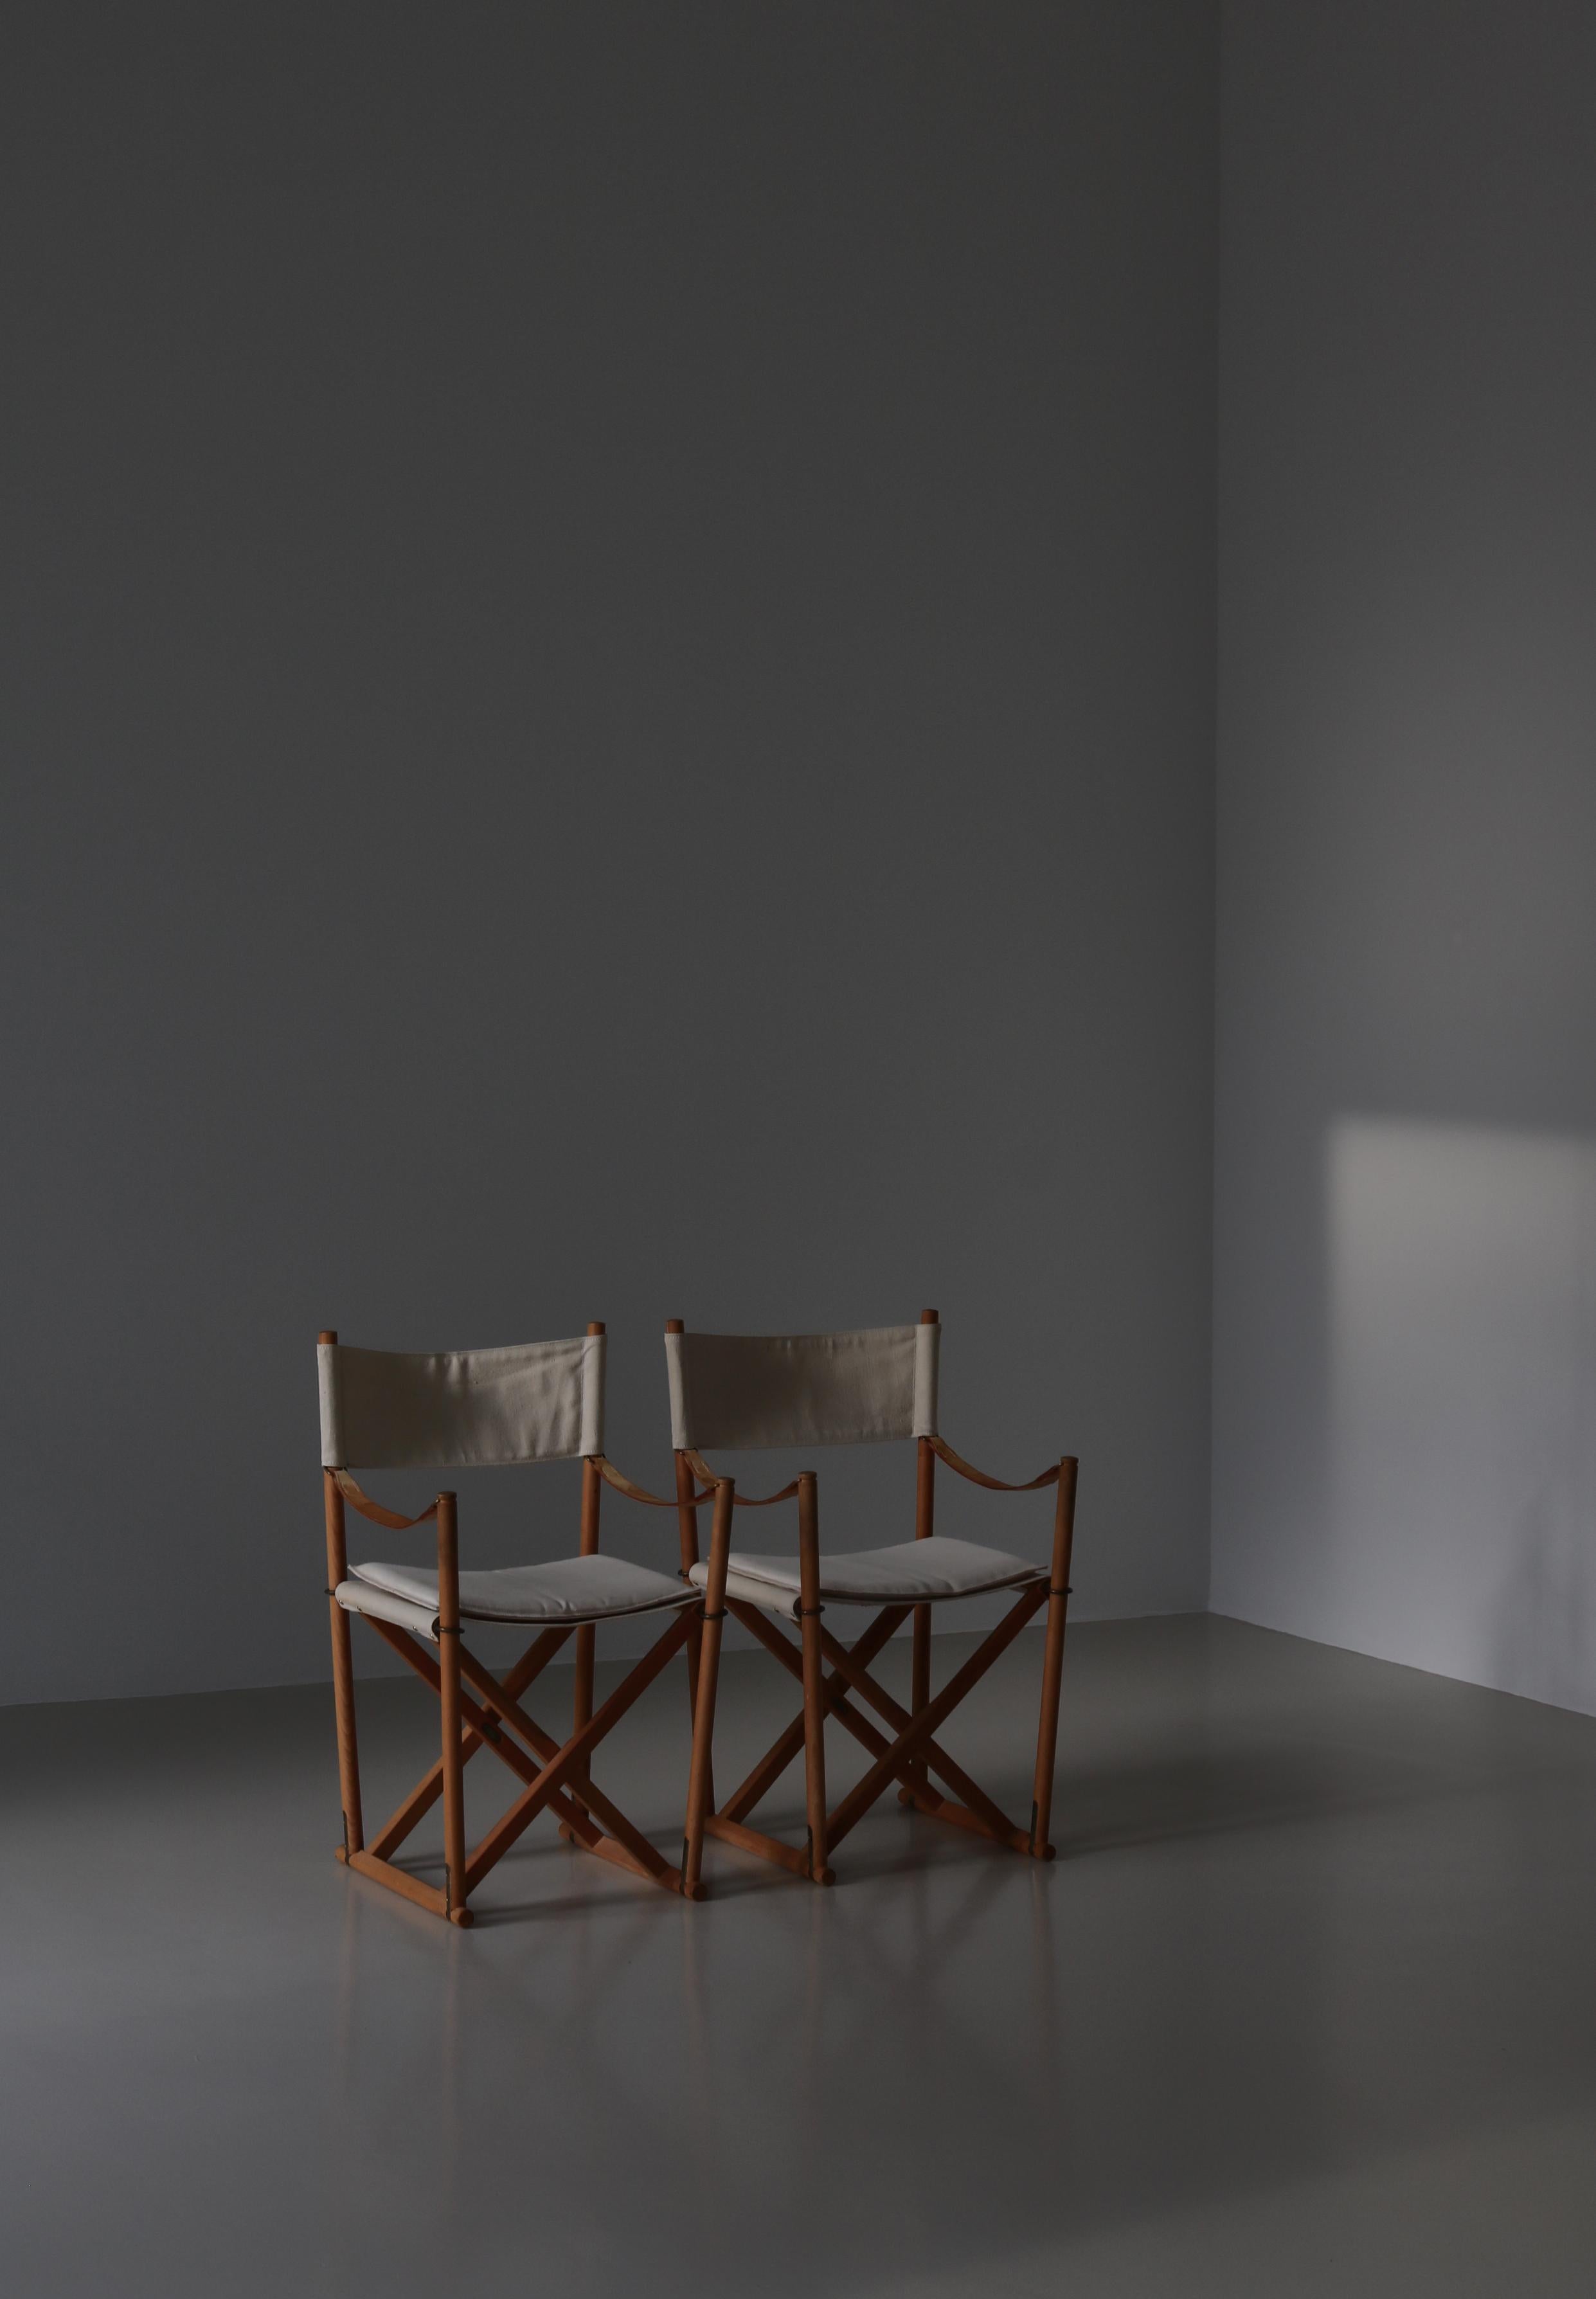 An original pair of Mogens Koch folding chairs model 